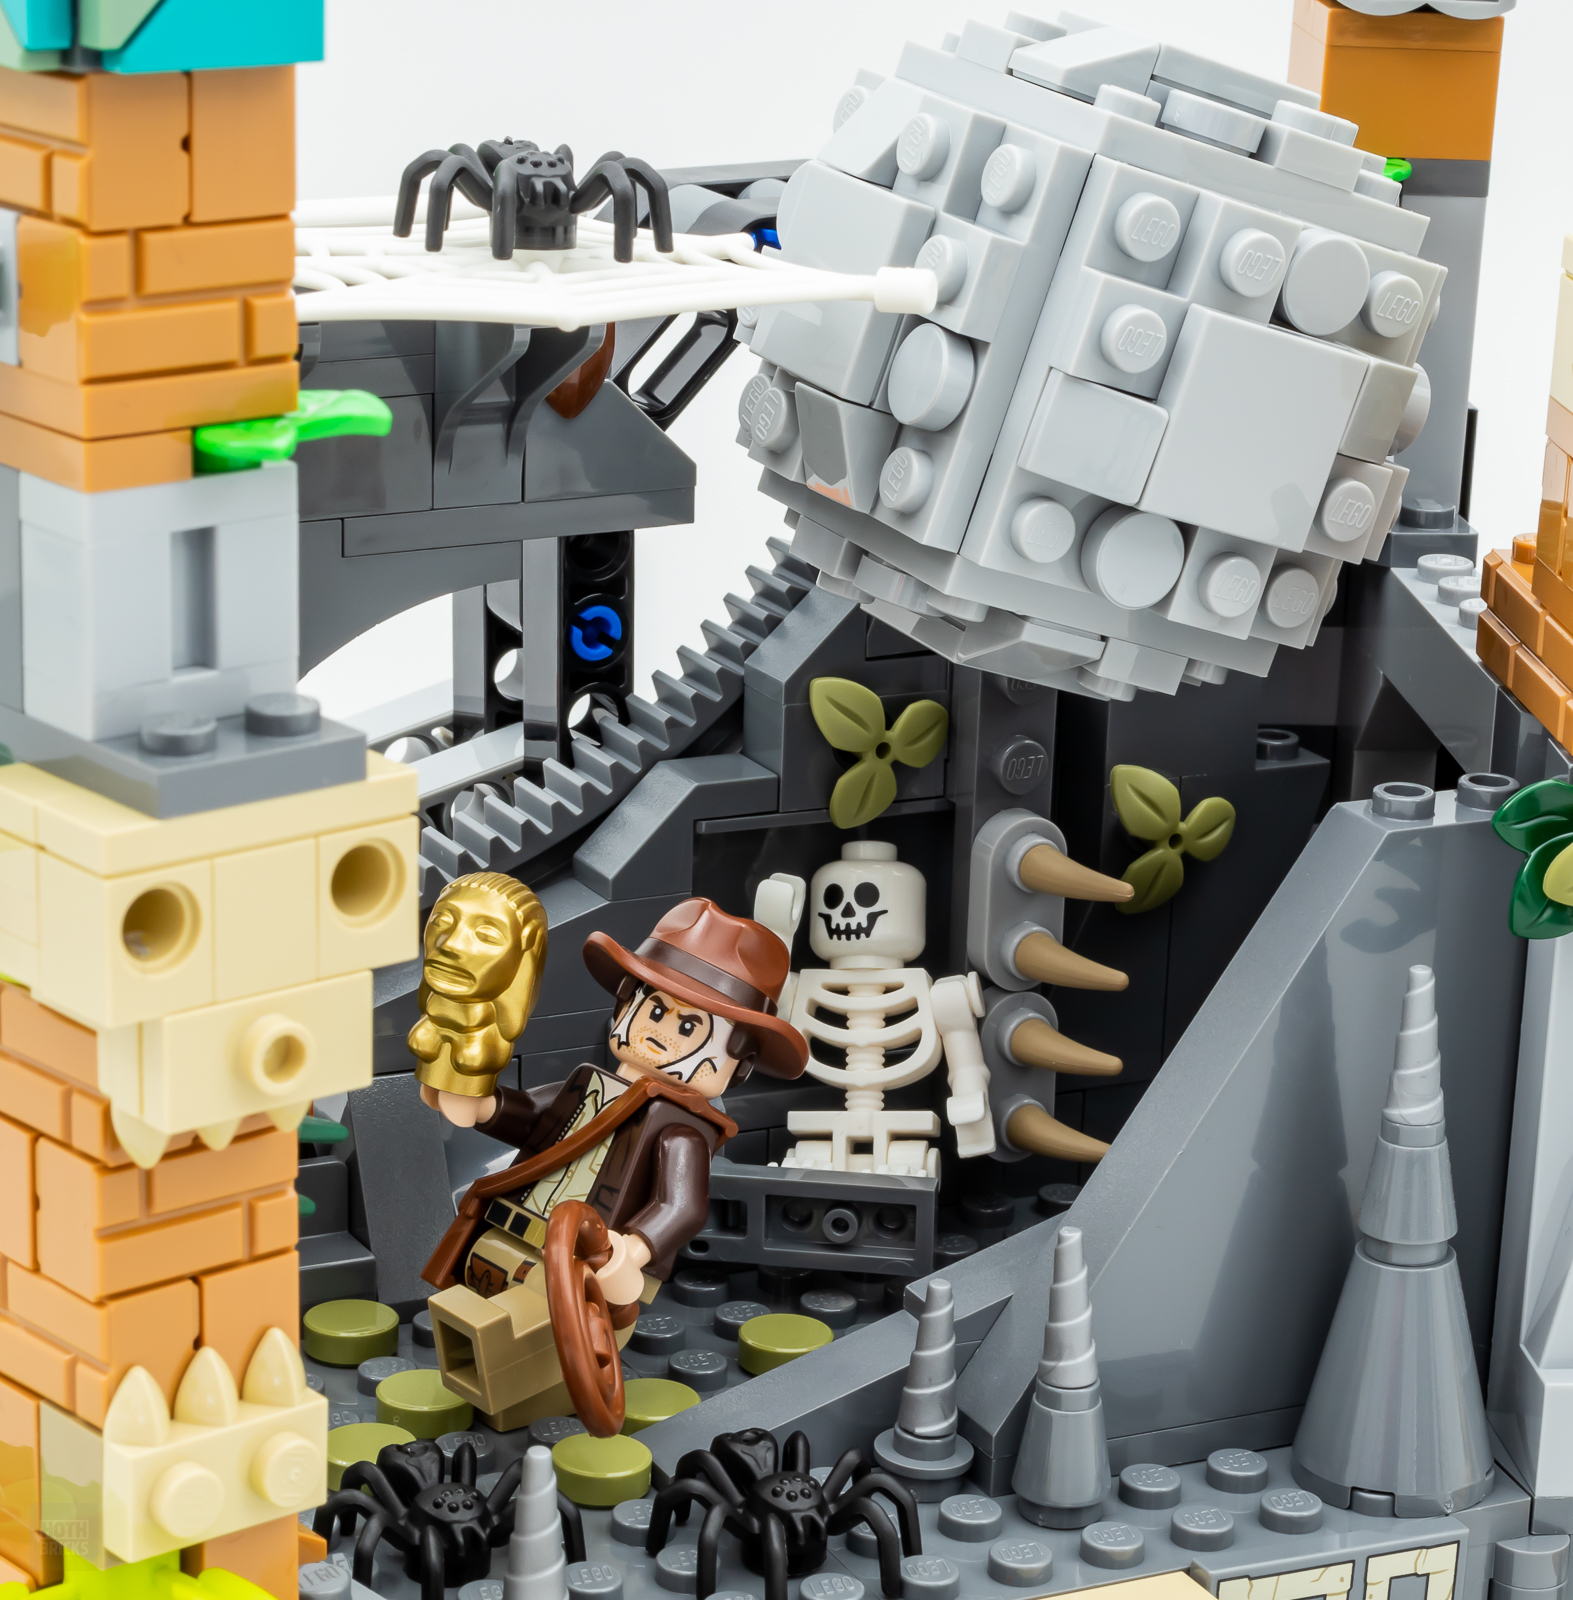 Nouveautés LEGO Indiana Jones 2023 : premiers visuels officiels -  HelloBricks